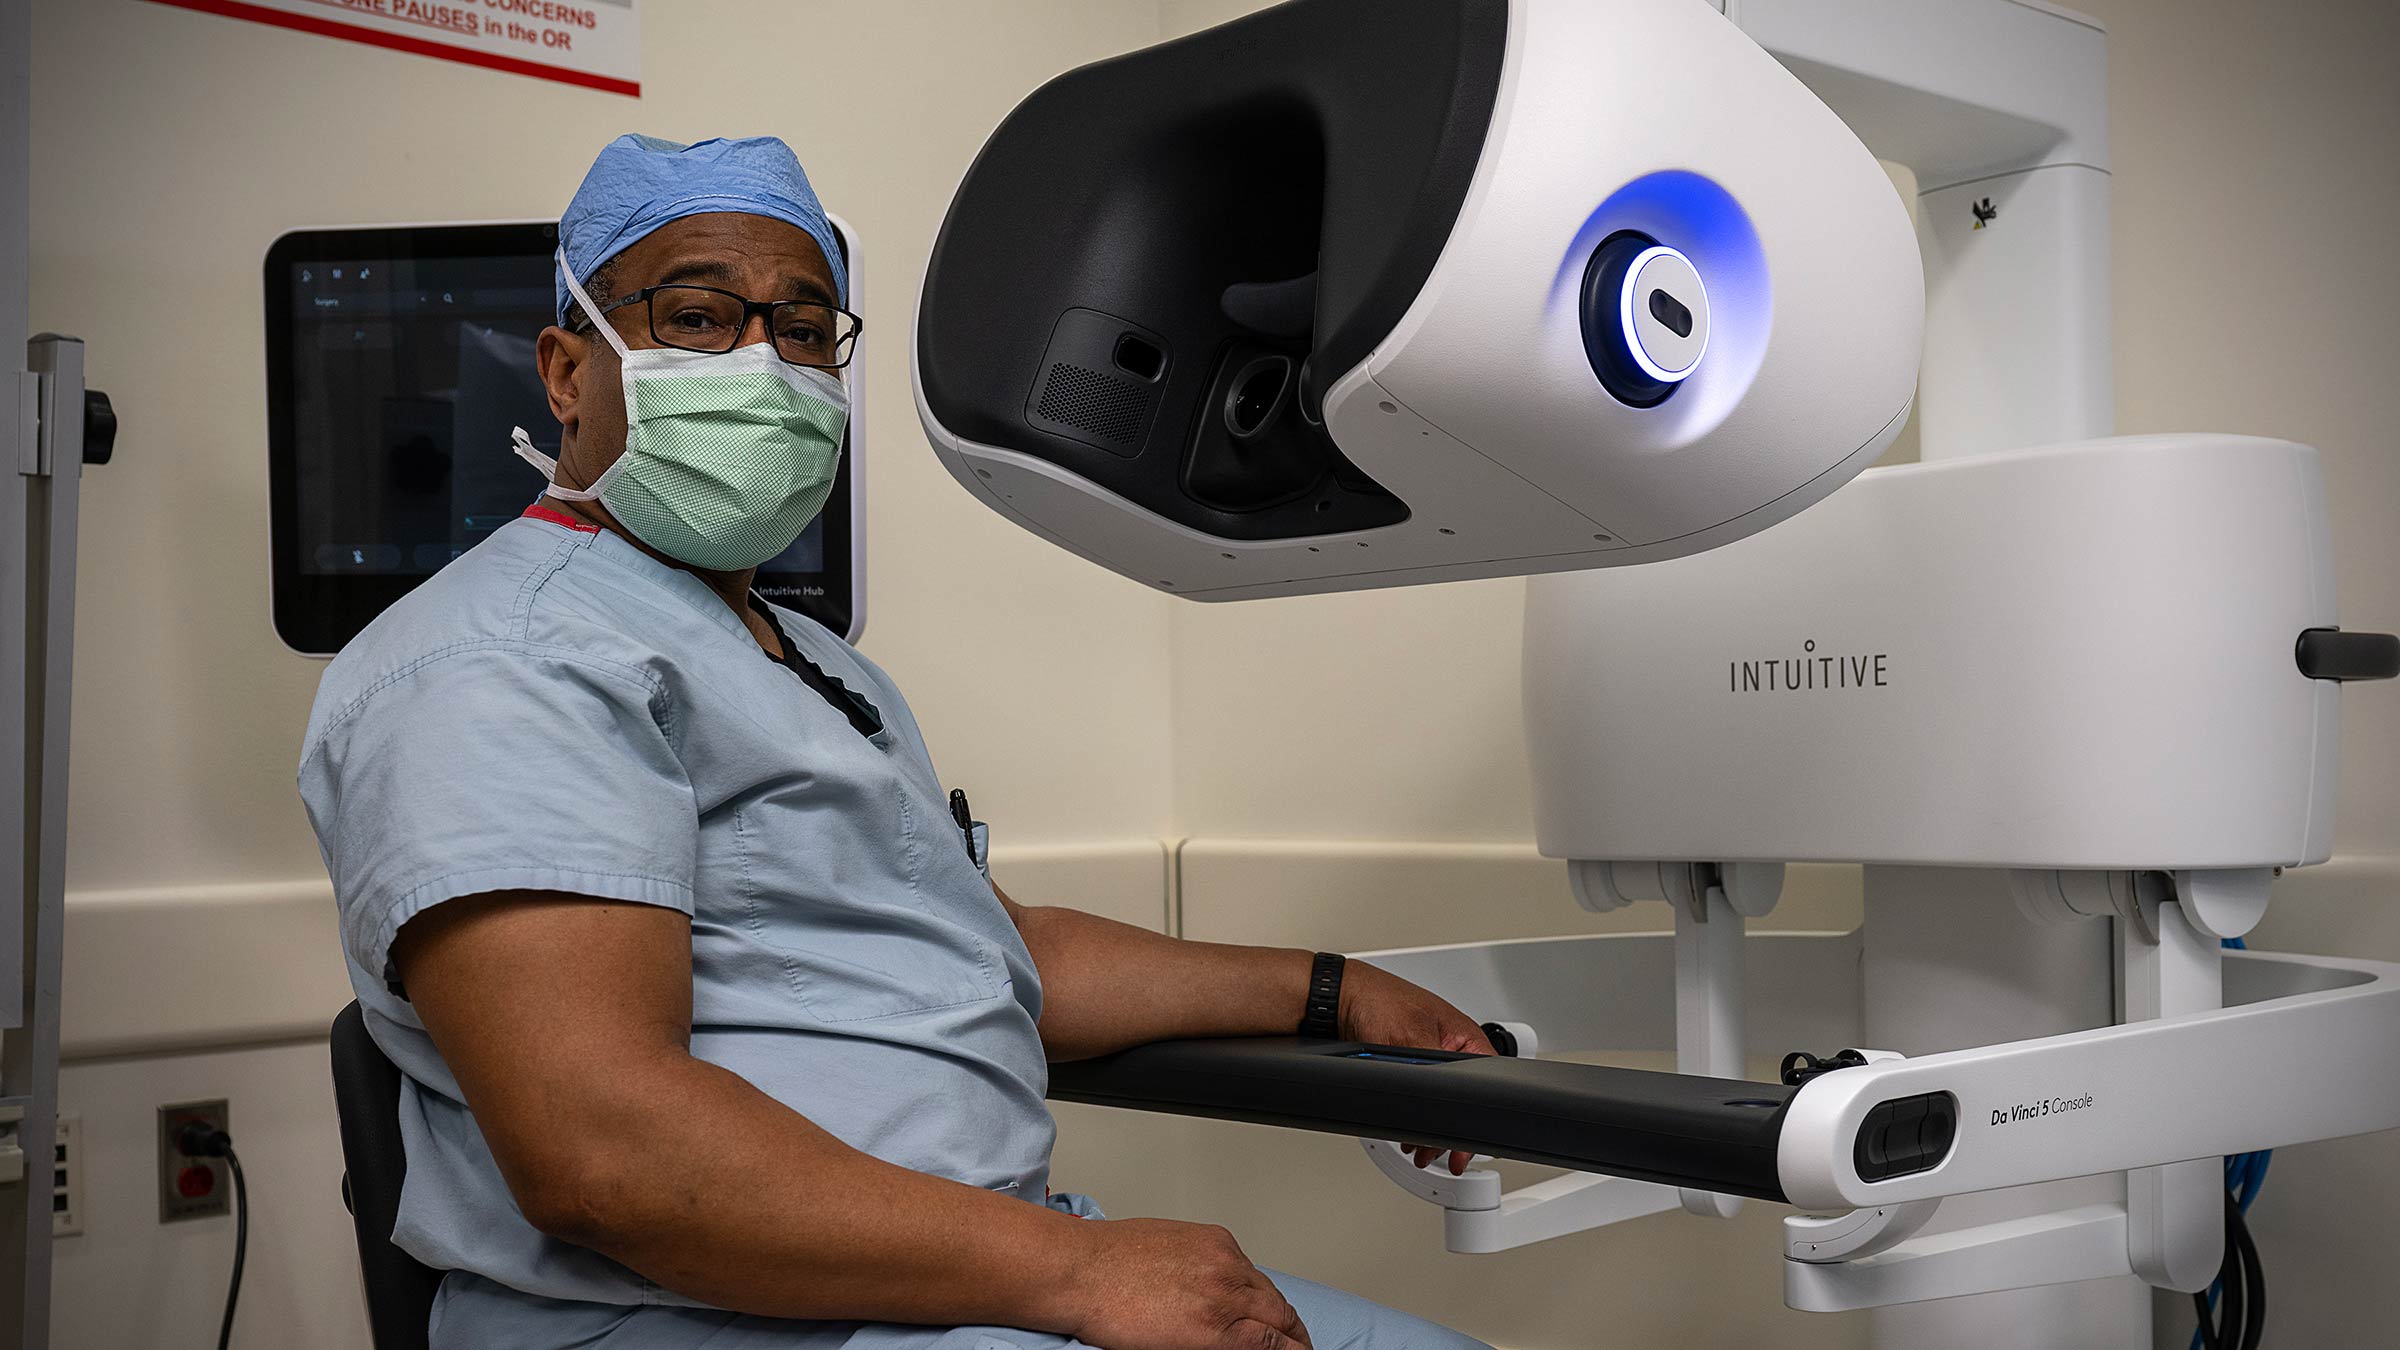 Dr. Robert Merritt in surgical scrubs looking up from the da Vinci 5 surgical robot